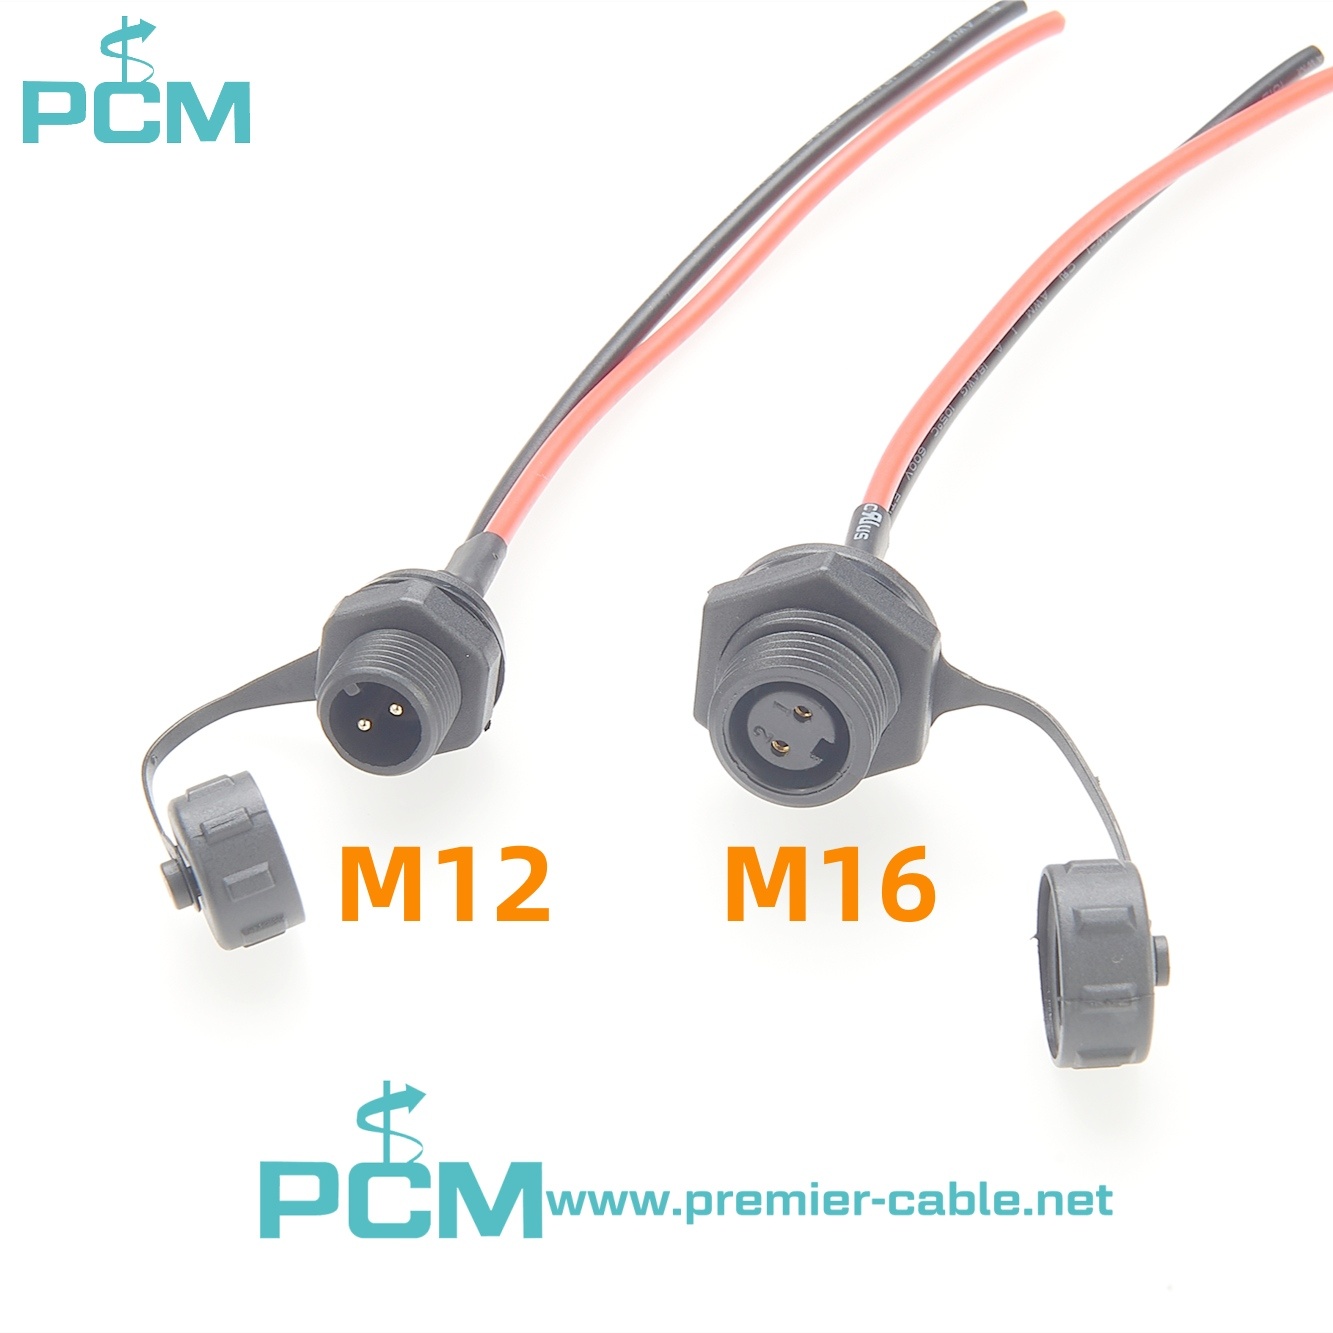 LED Street Light M12 M16 Panel Mount 2 Pole Connector